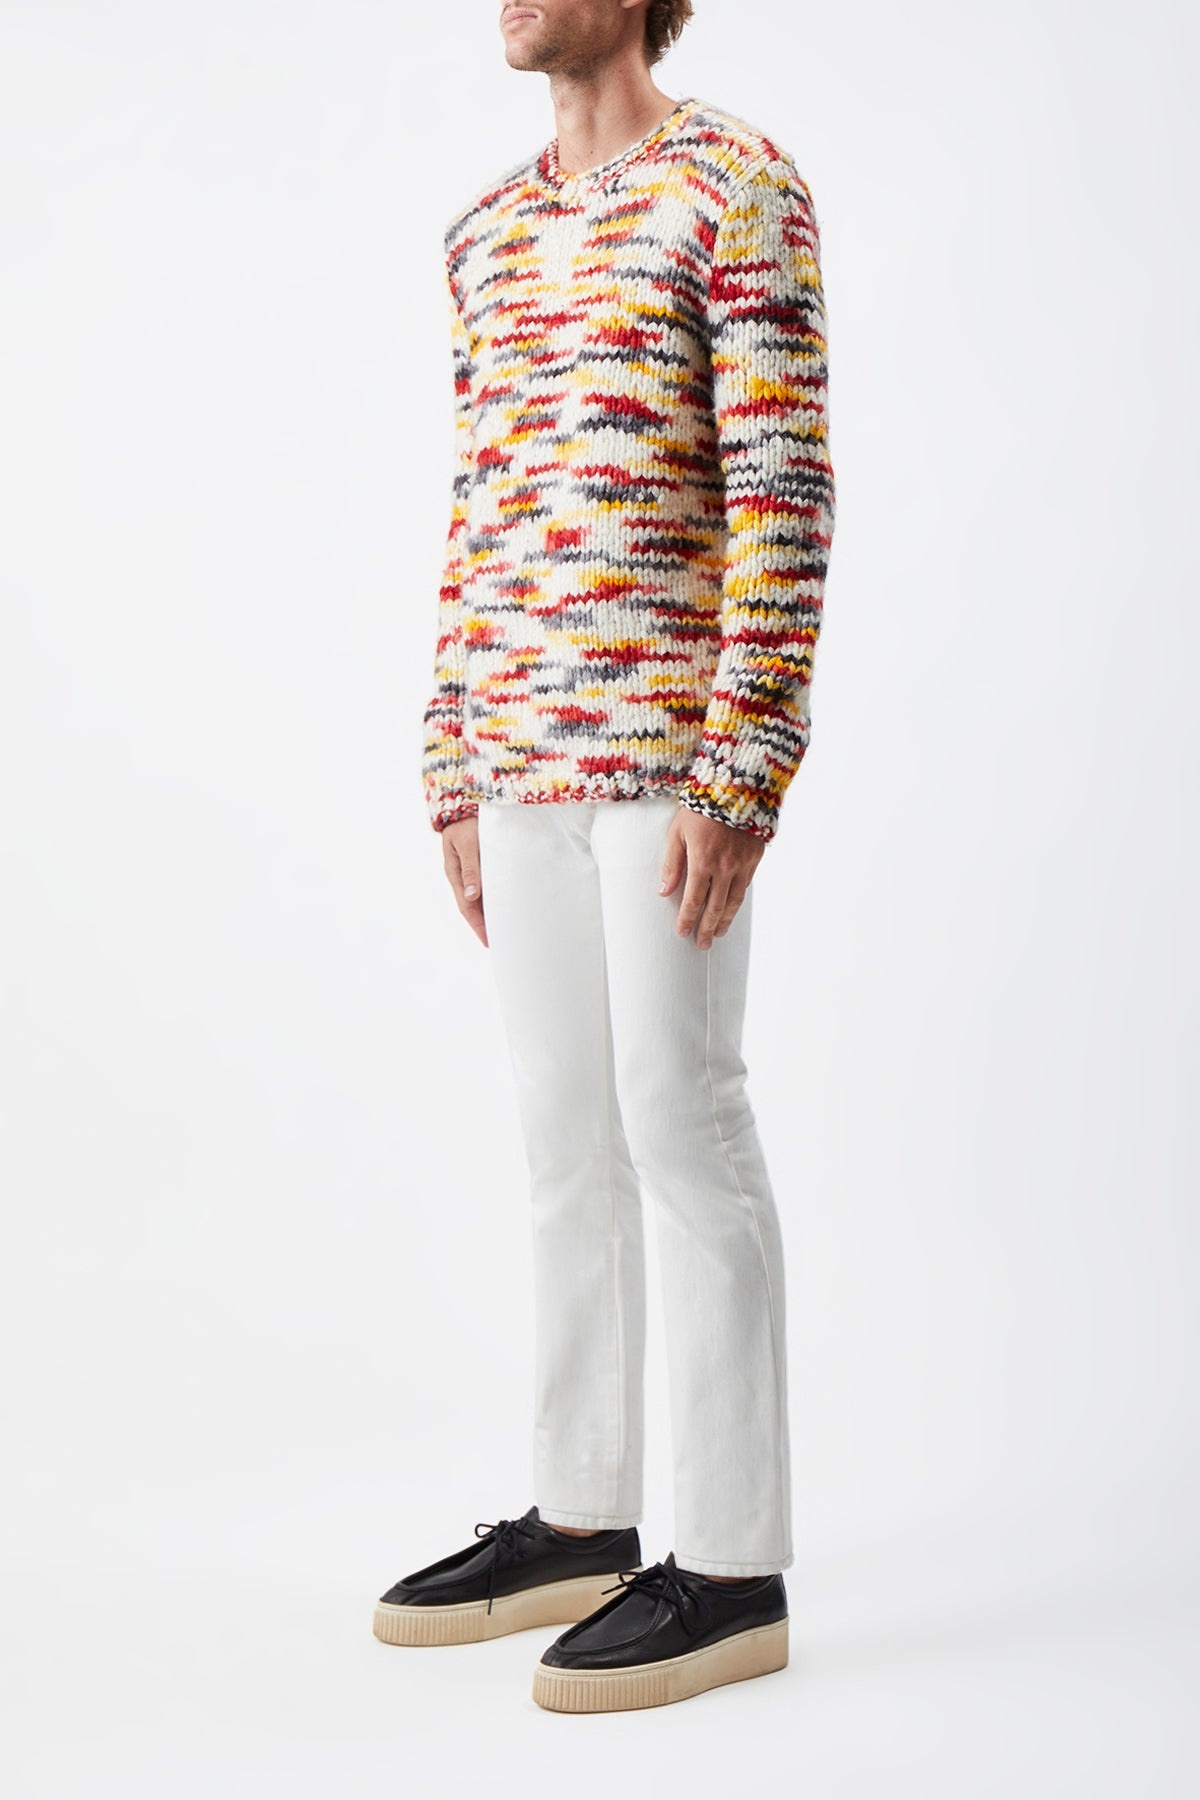 Lawrence Knit Sweater in Fire Multi Space Dye Welfat Cashmere - 3